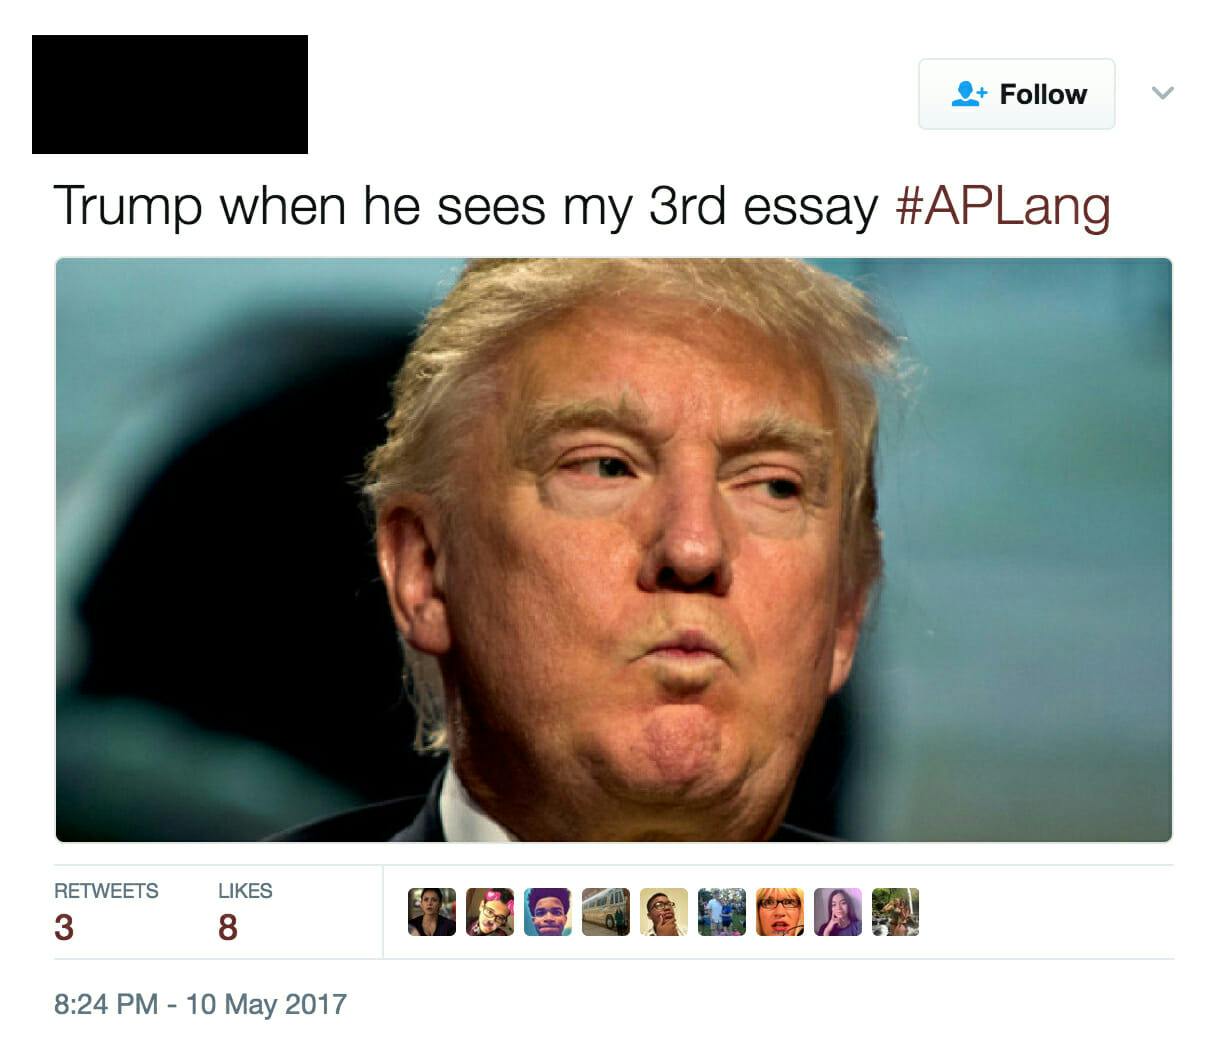 High school kids are roasting Trump in their AP exams